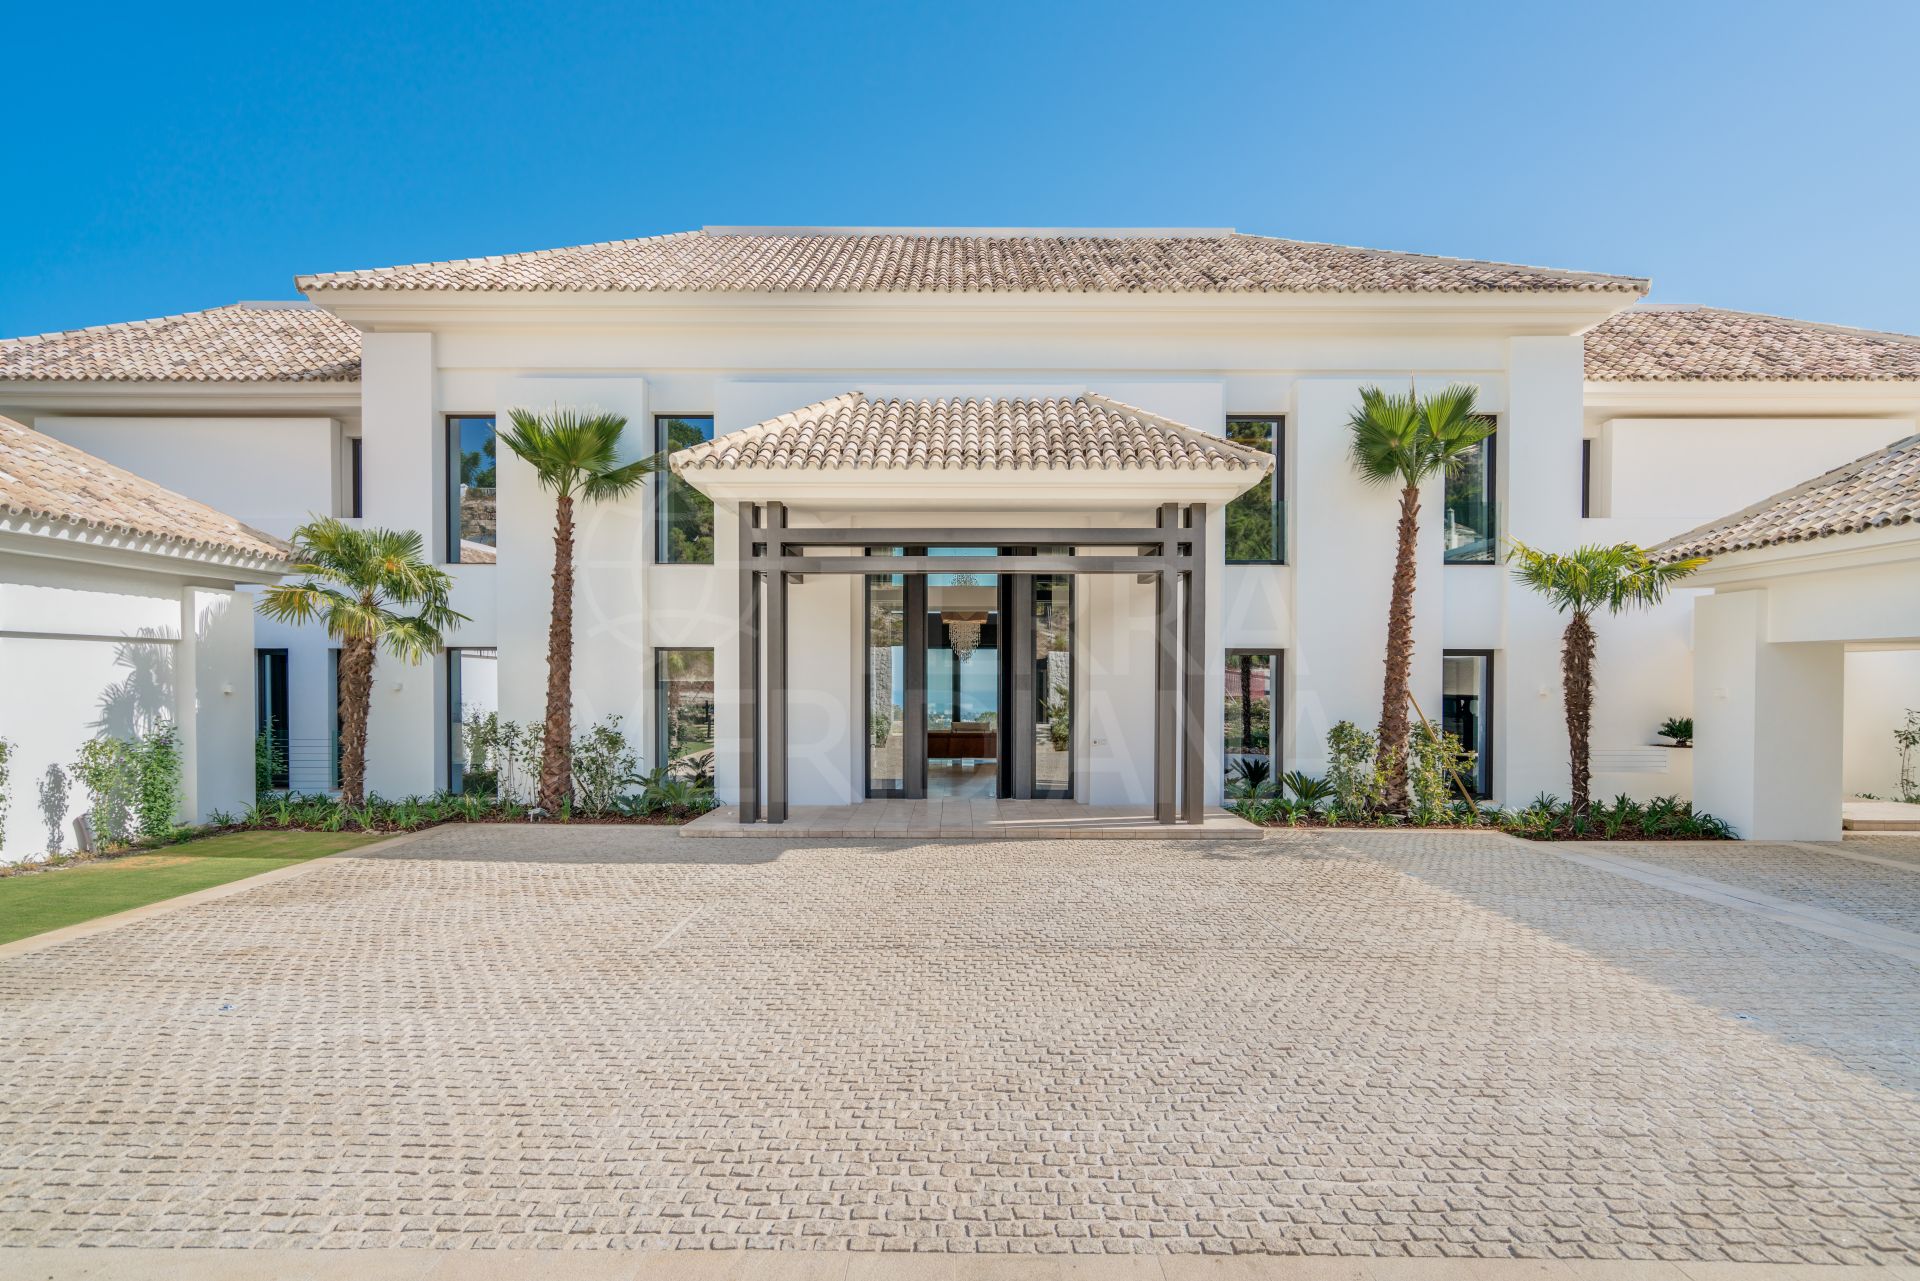 Contemporary new 7 bedroom villa for sale in La Zagaleta, with panoramic views to the sea